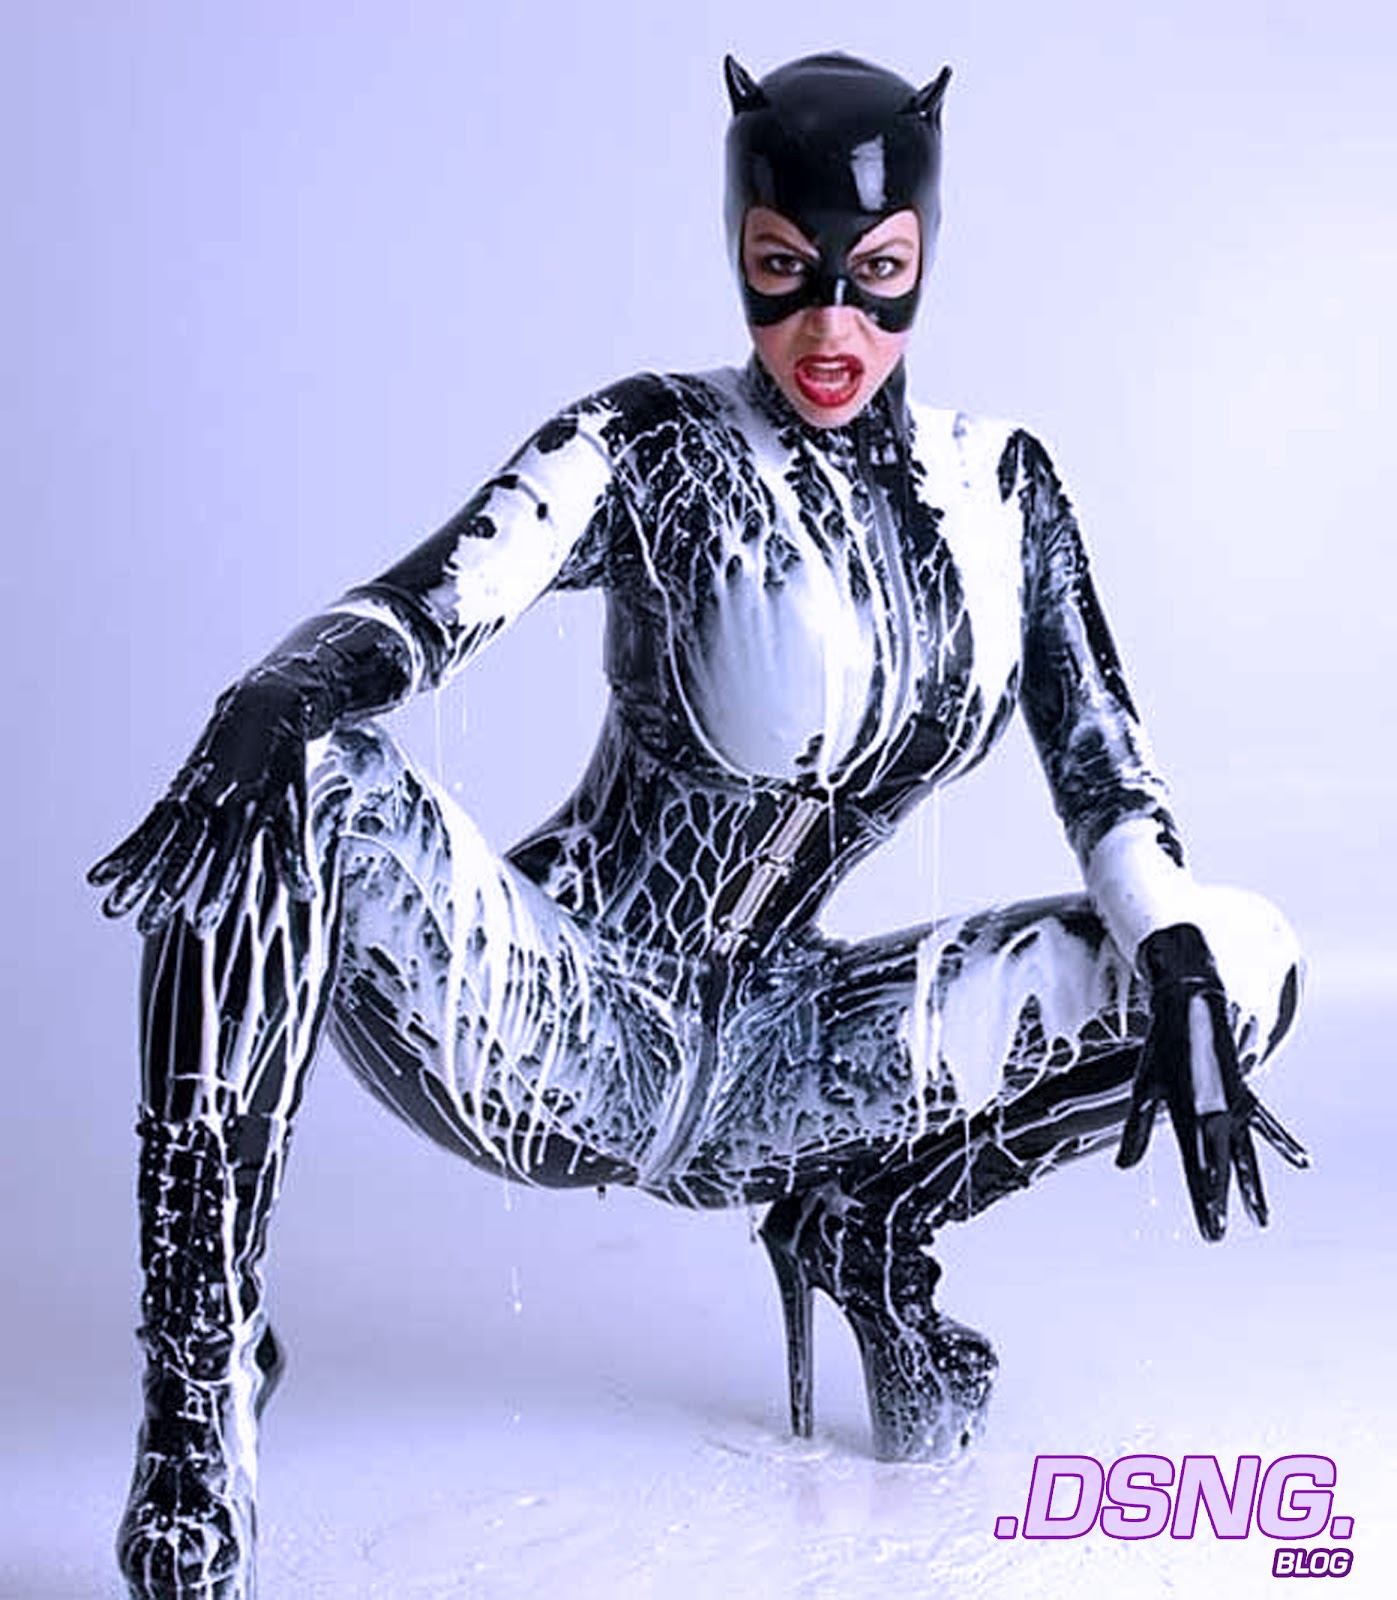 Chidi Okonkwo S Blog Dc Comics Catwoman Cosplay February 14 2012